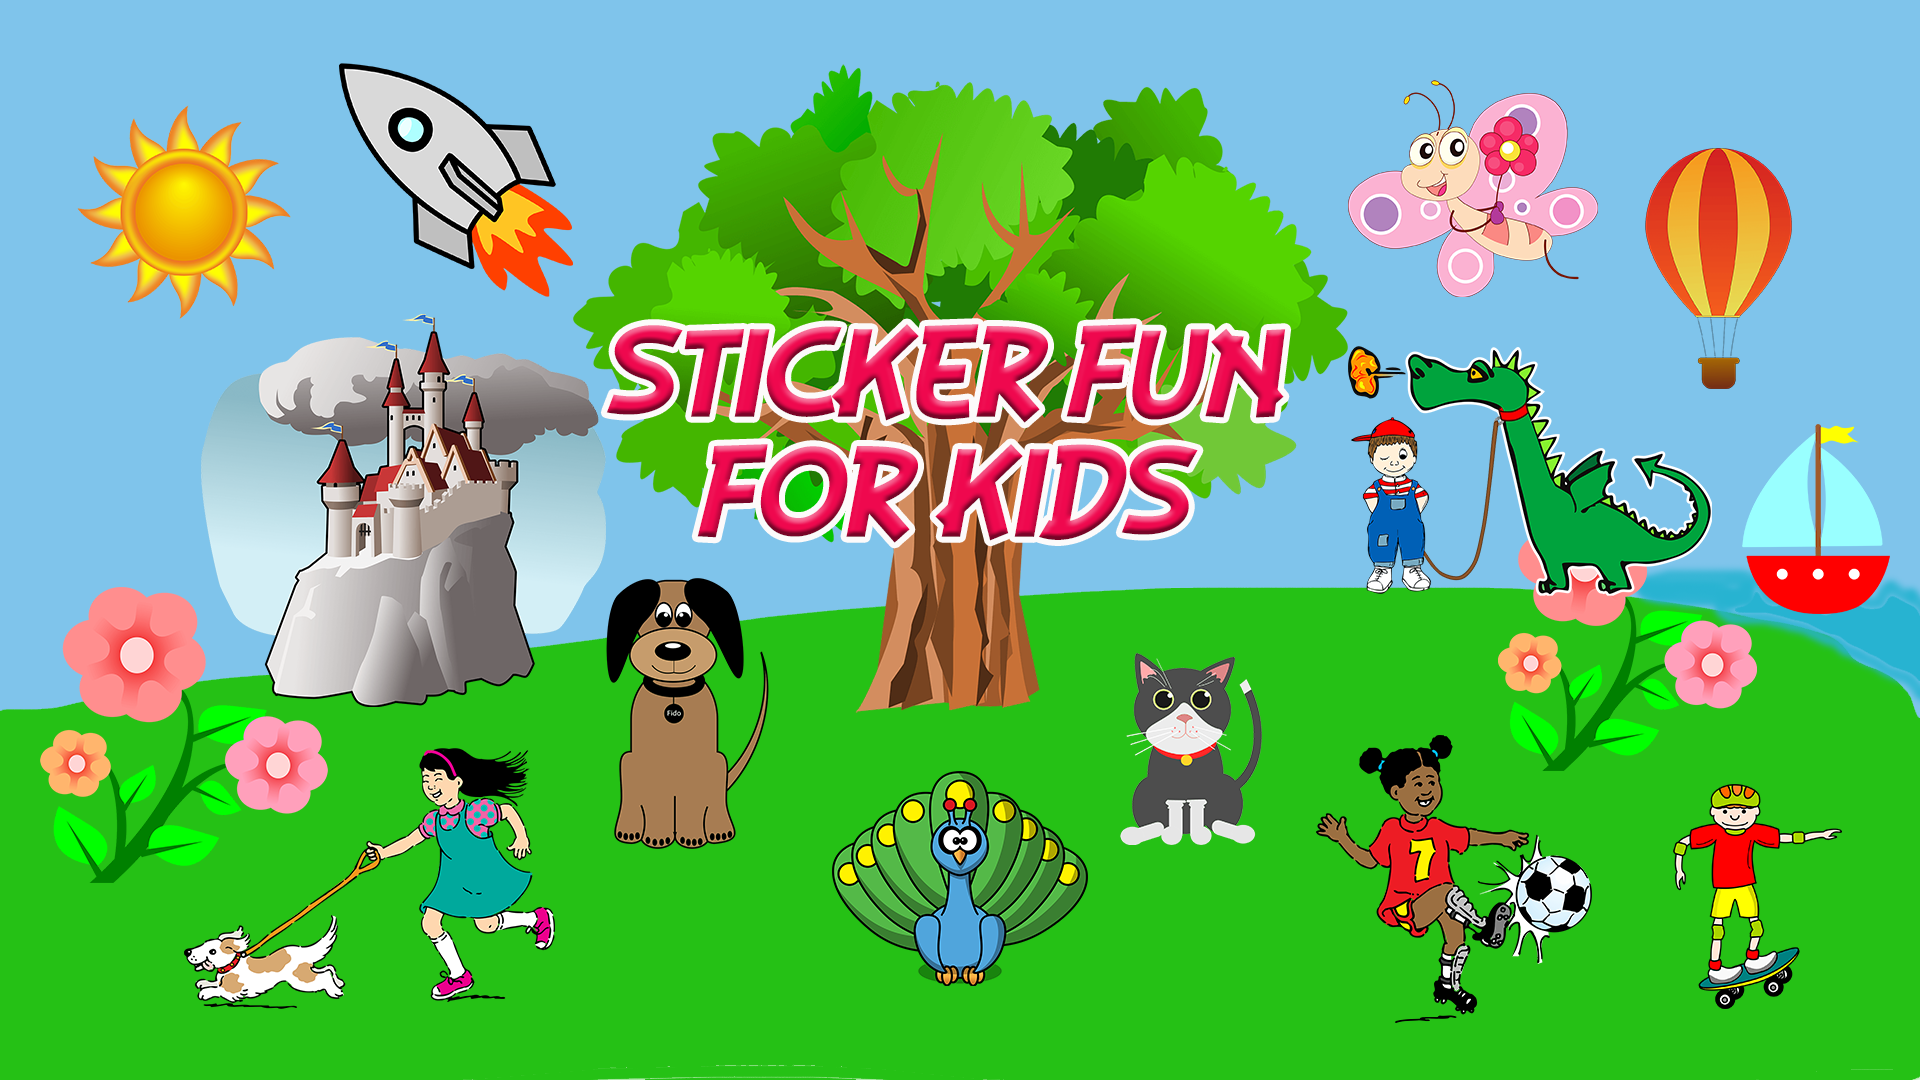 Sticker Fun for Kids